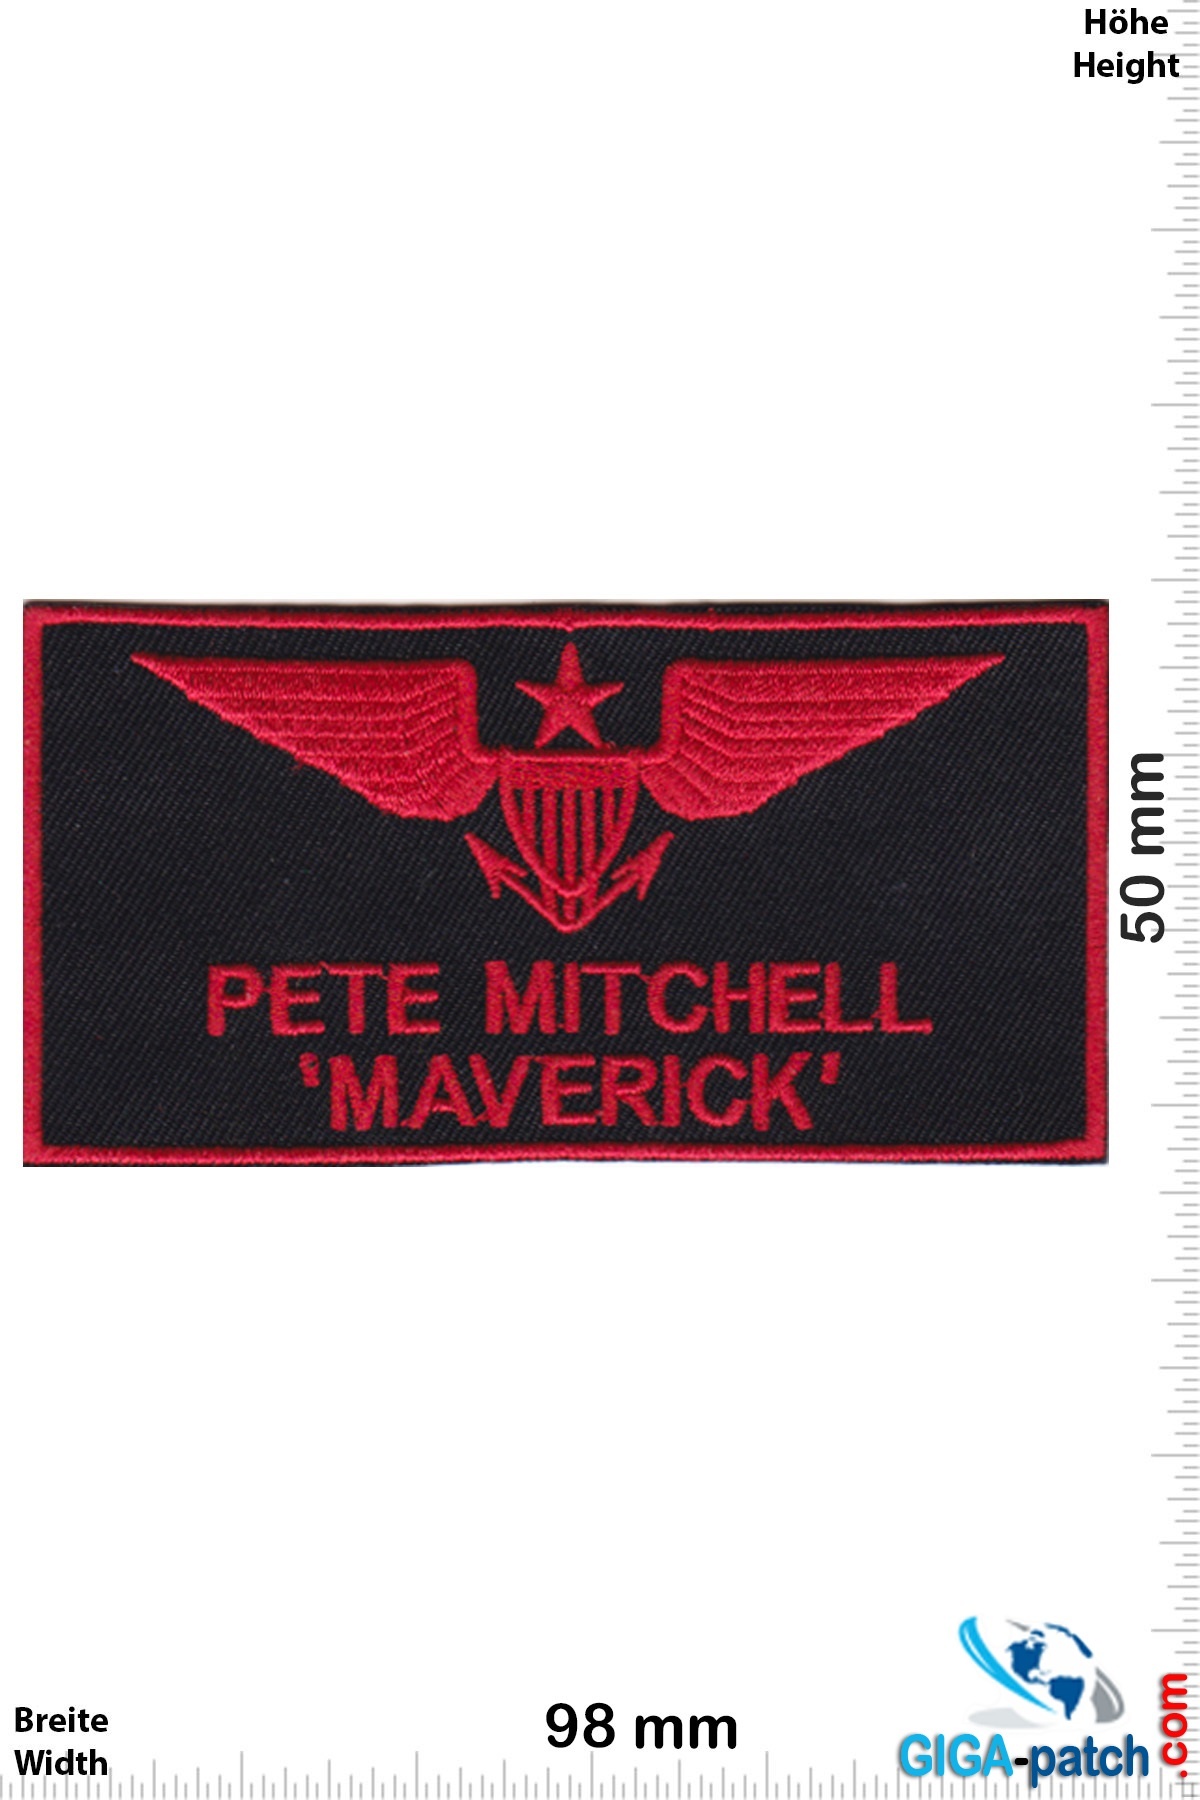 Top Gun - Pete Mitchell - MAVERICK -Top Gun- Patch - Back Patches - Patch  Keychains Stickers -  - Biggest Patch Shop worldwide